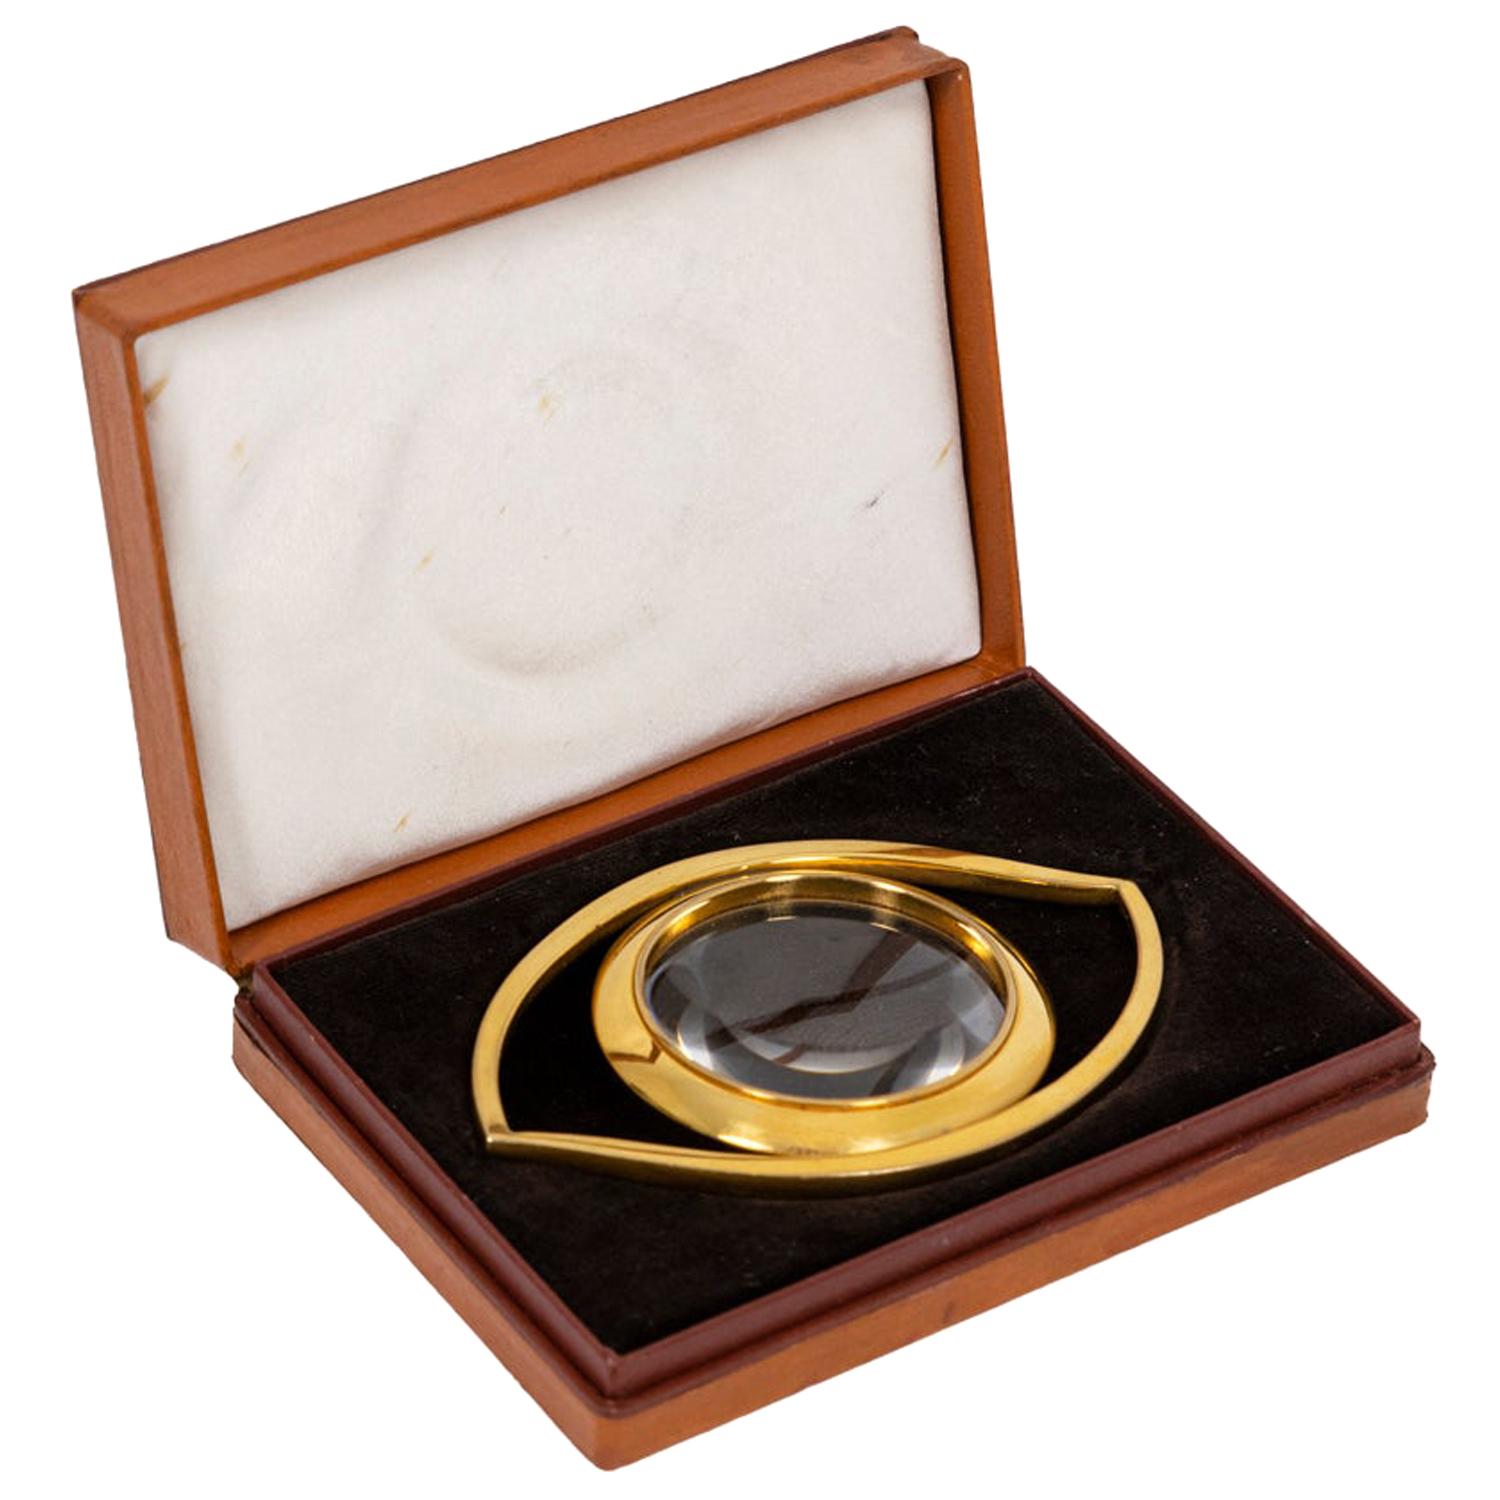 Maison Hermès, “Eye” Desktop Magnifying Glass in Gilt Brass, 1960s